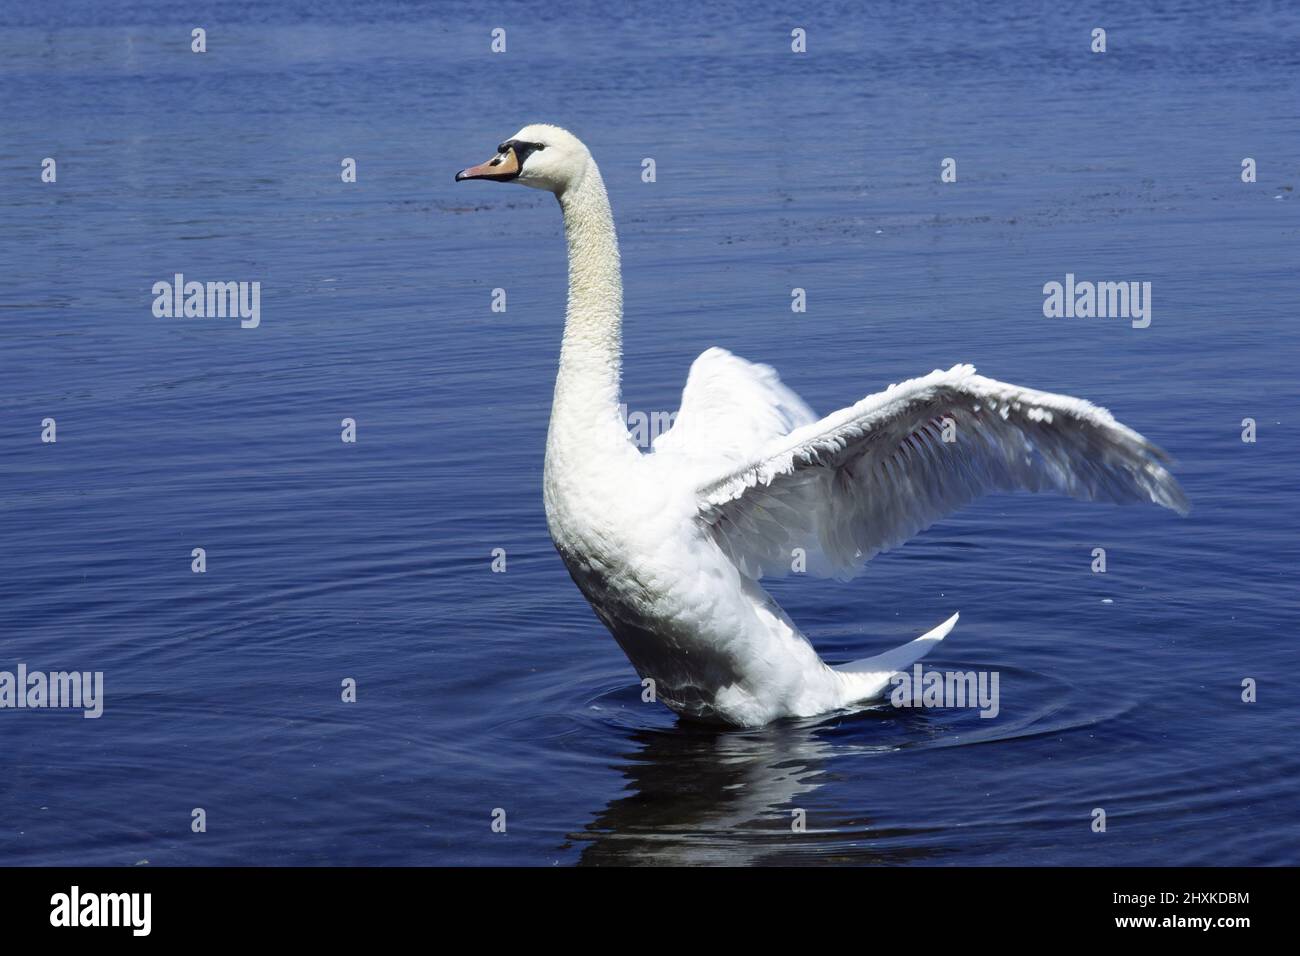 mute swan in a lake at open wings, Cygnus olor, Anatidae Stock Photo